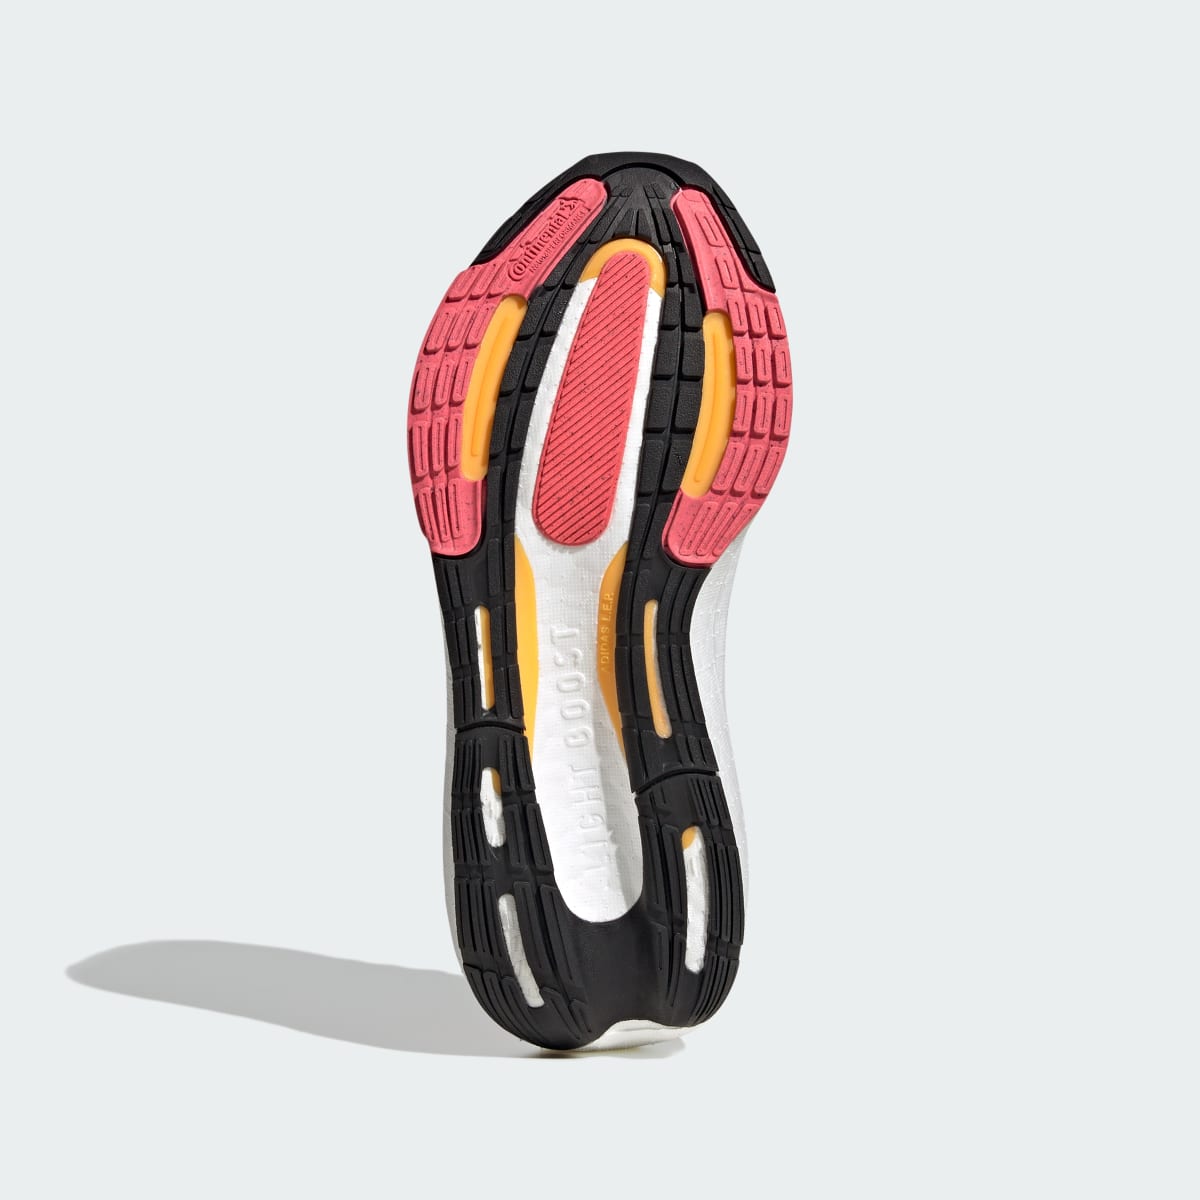 Adidas by Stella McCartney Ultraboost Light Ayakkabı. 4